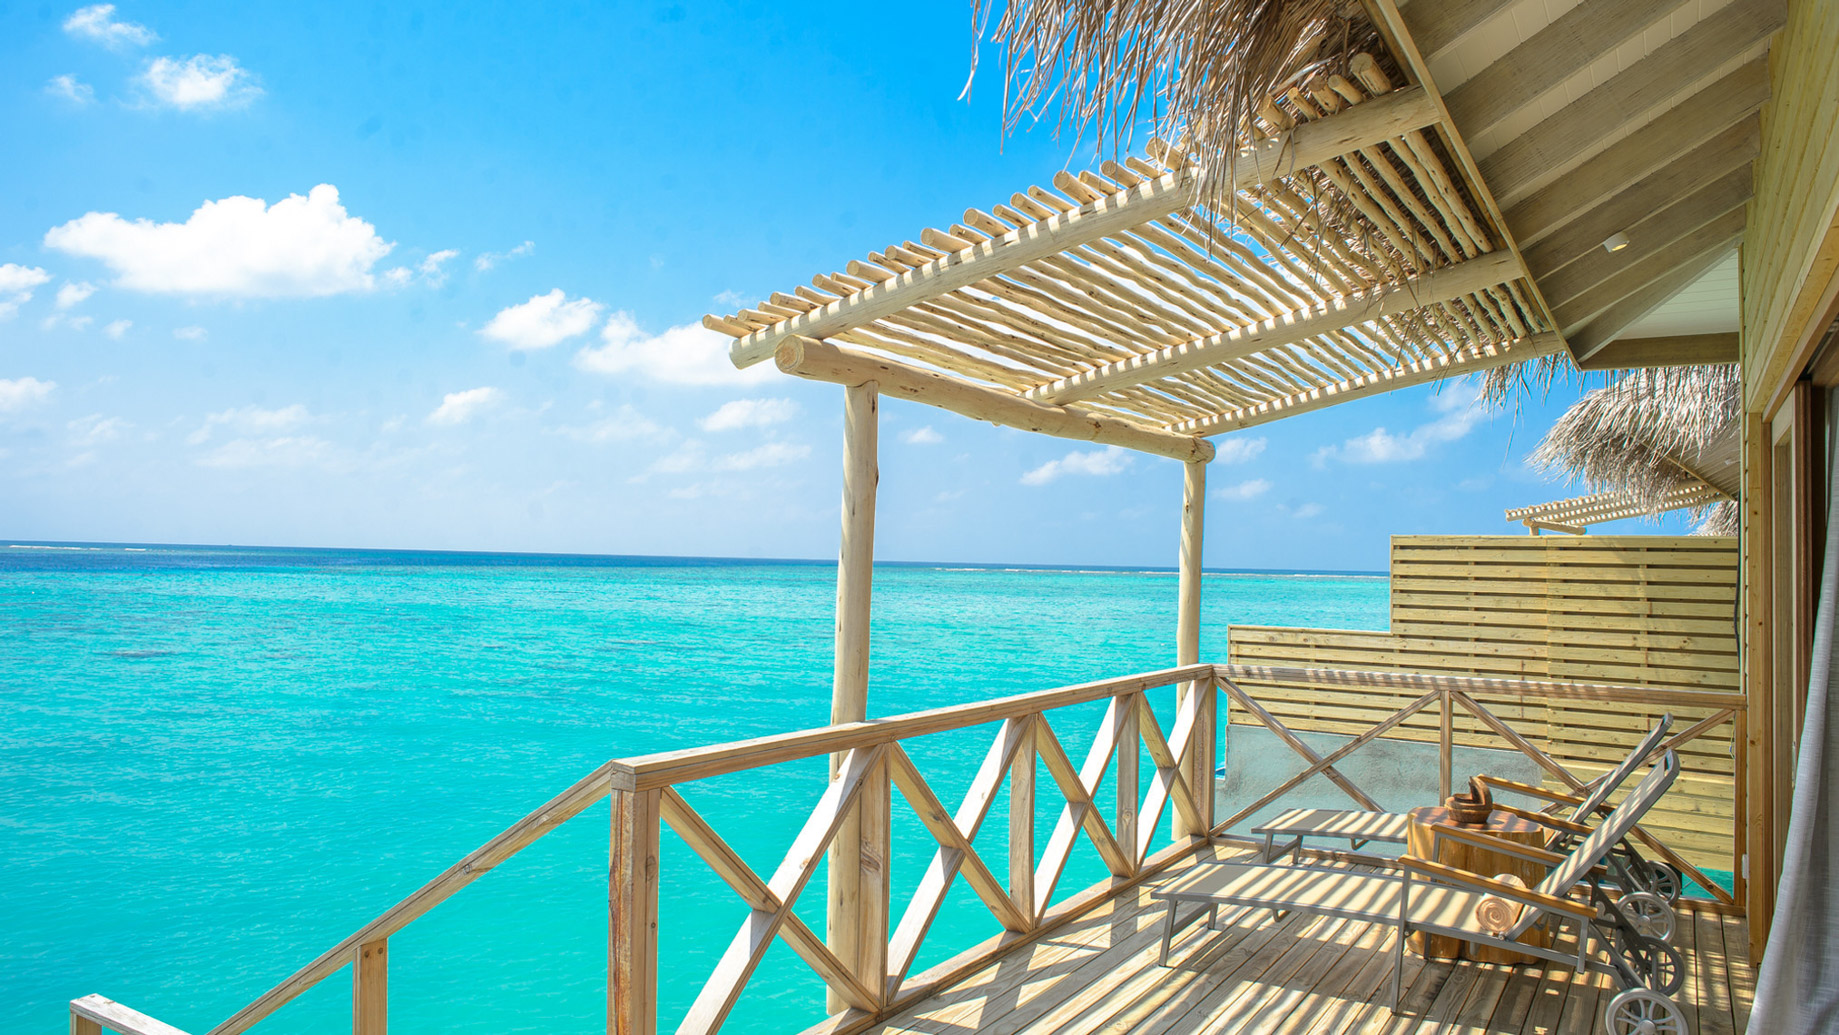 You & Me Maldives Resort - Uthurumaafaru, Raa Atoll, Maldives - Aqua Suite with Pool Deck